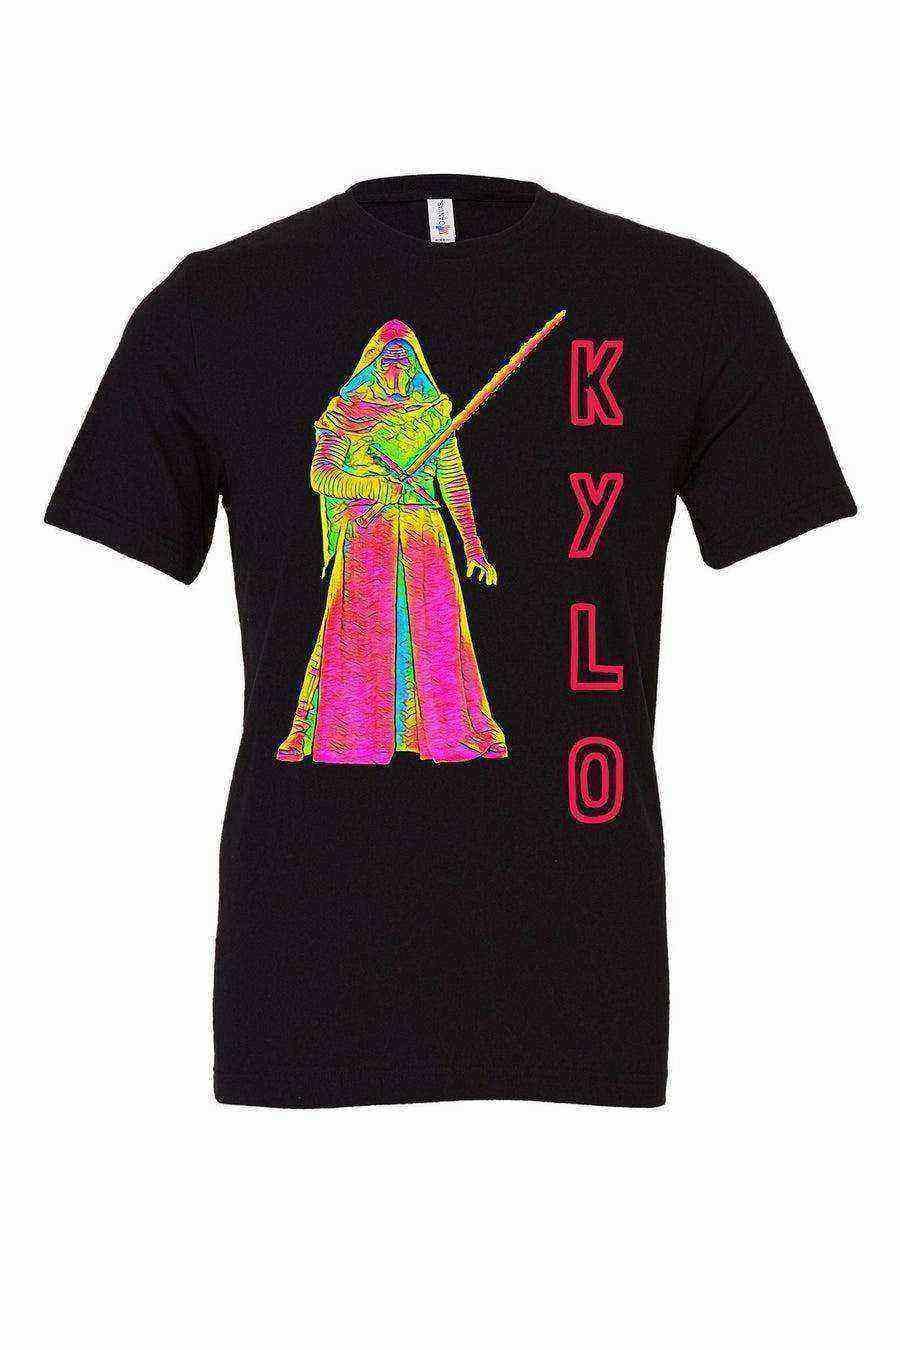 Womens | Kylo Neon Shirt | Star Wars Shirt - Dylan's Tees